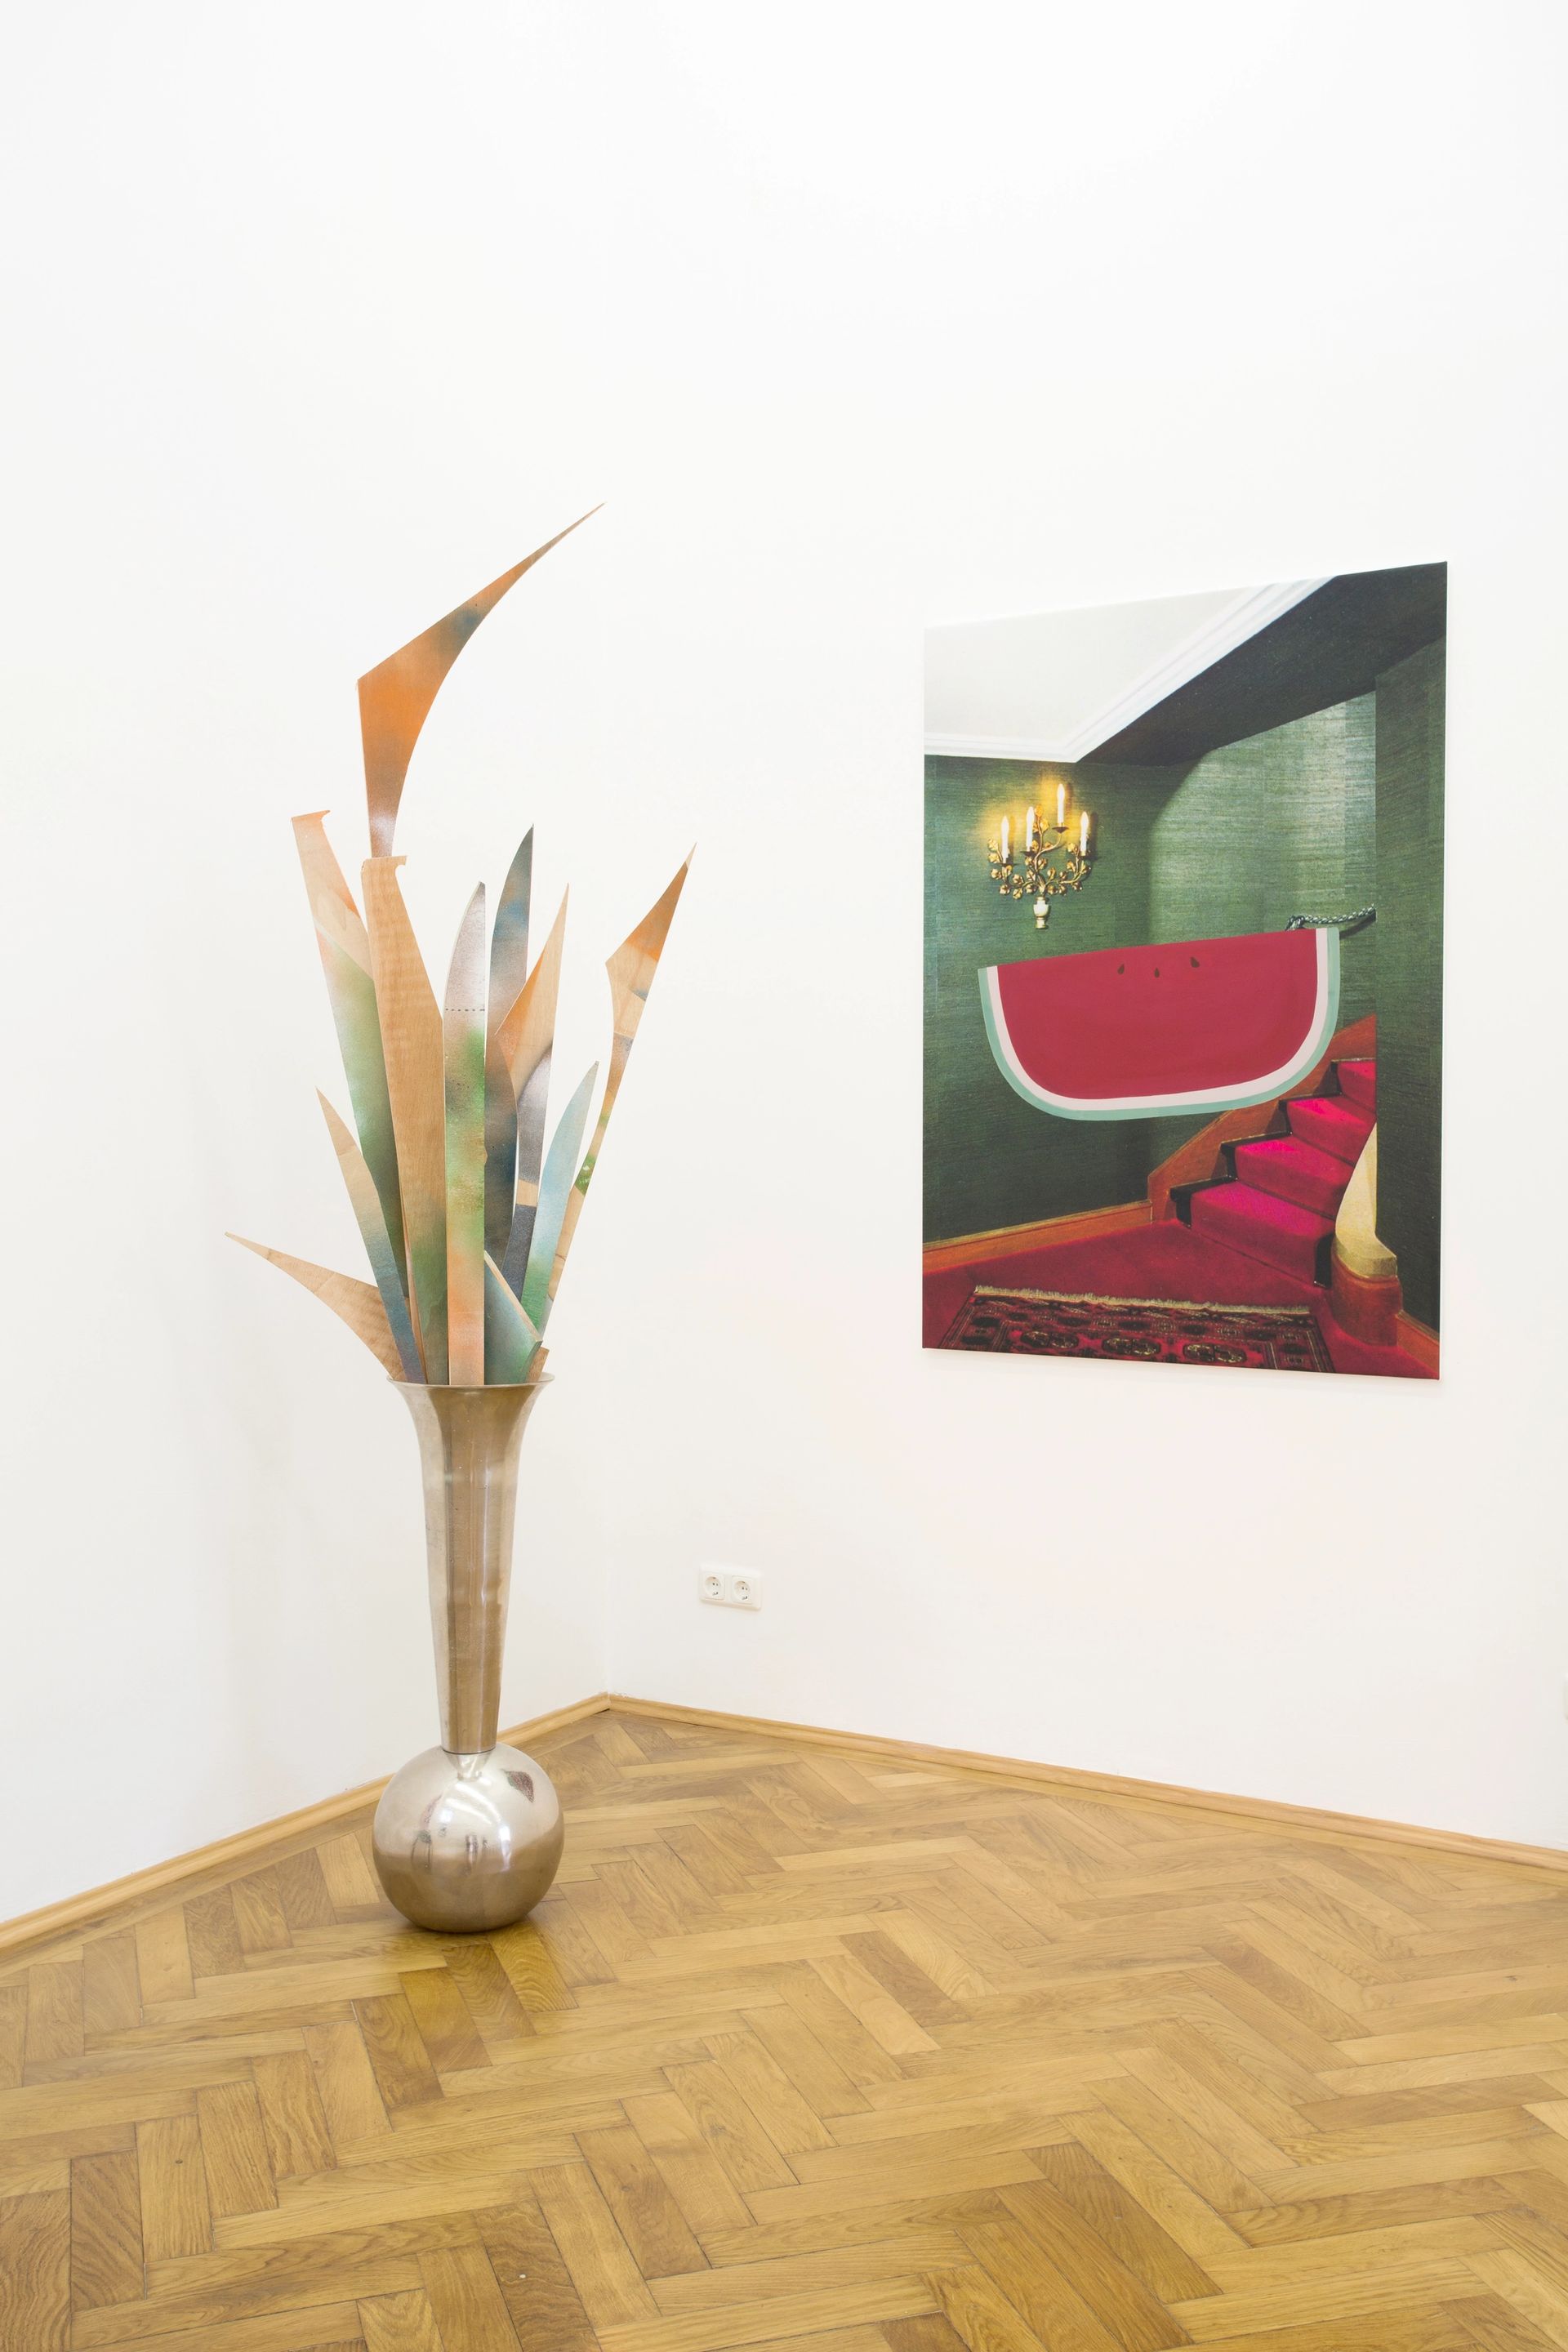 Installation view: Elvire Bonduelle, “waiting room #4”, 2015 (Émile Vappereau, Amedeo Polazzo)